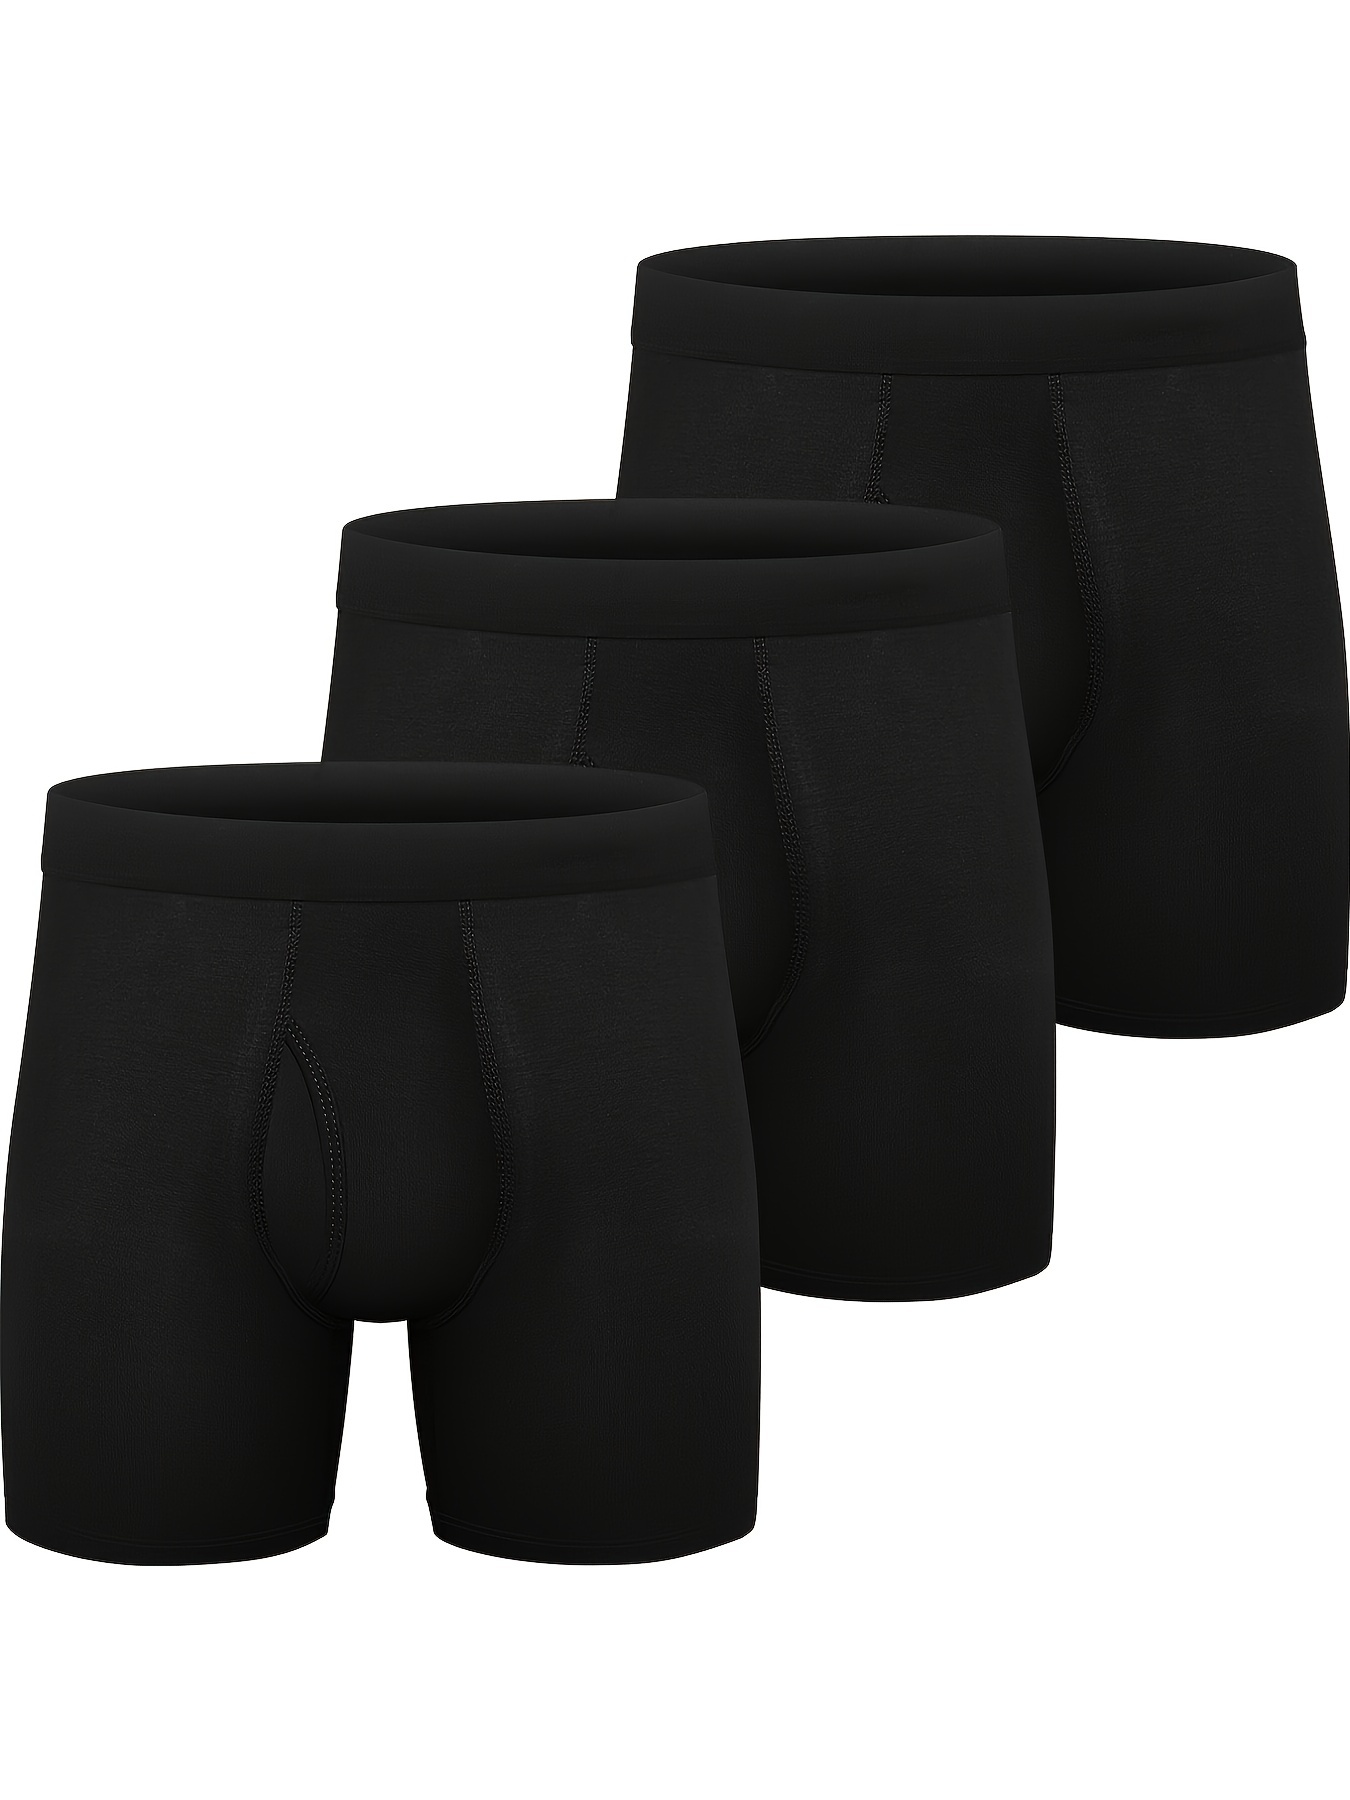 4 Packs Bamboo Rayon Trunks Underwear